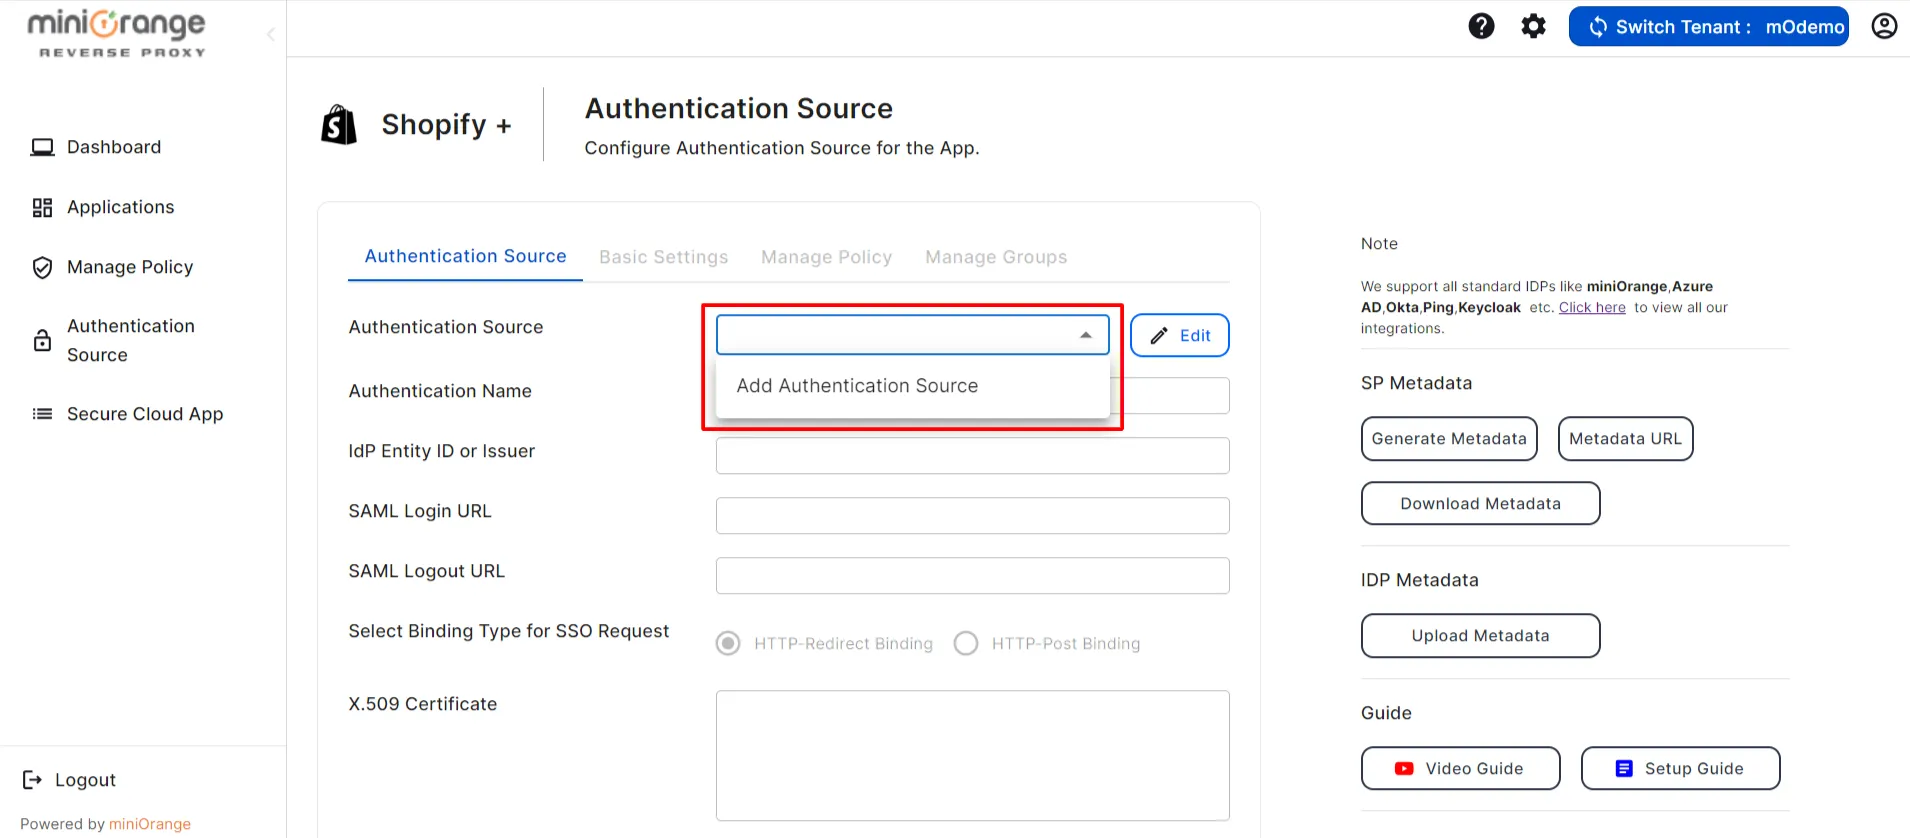 shopify plus CASB Access Restriction Add authentication